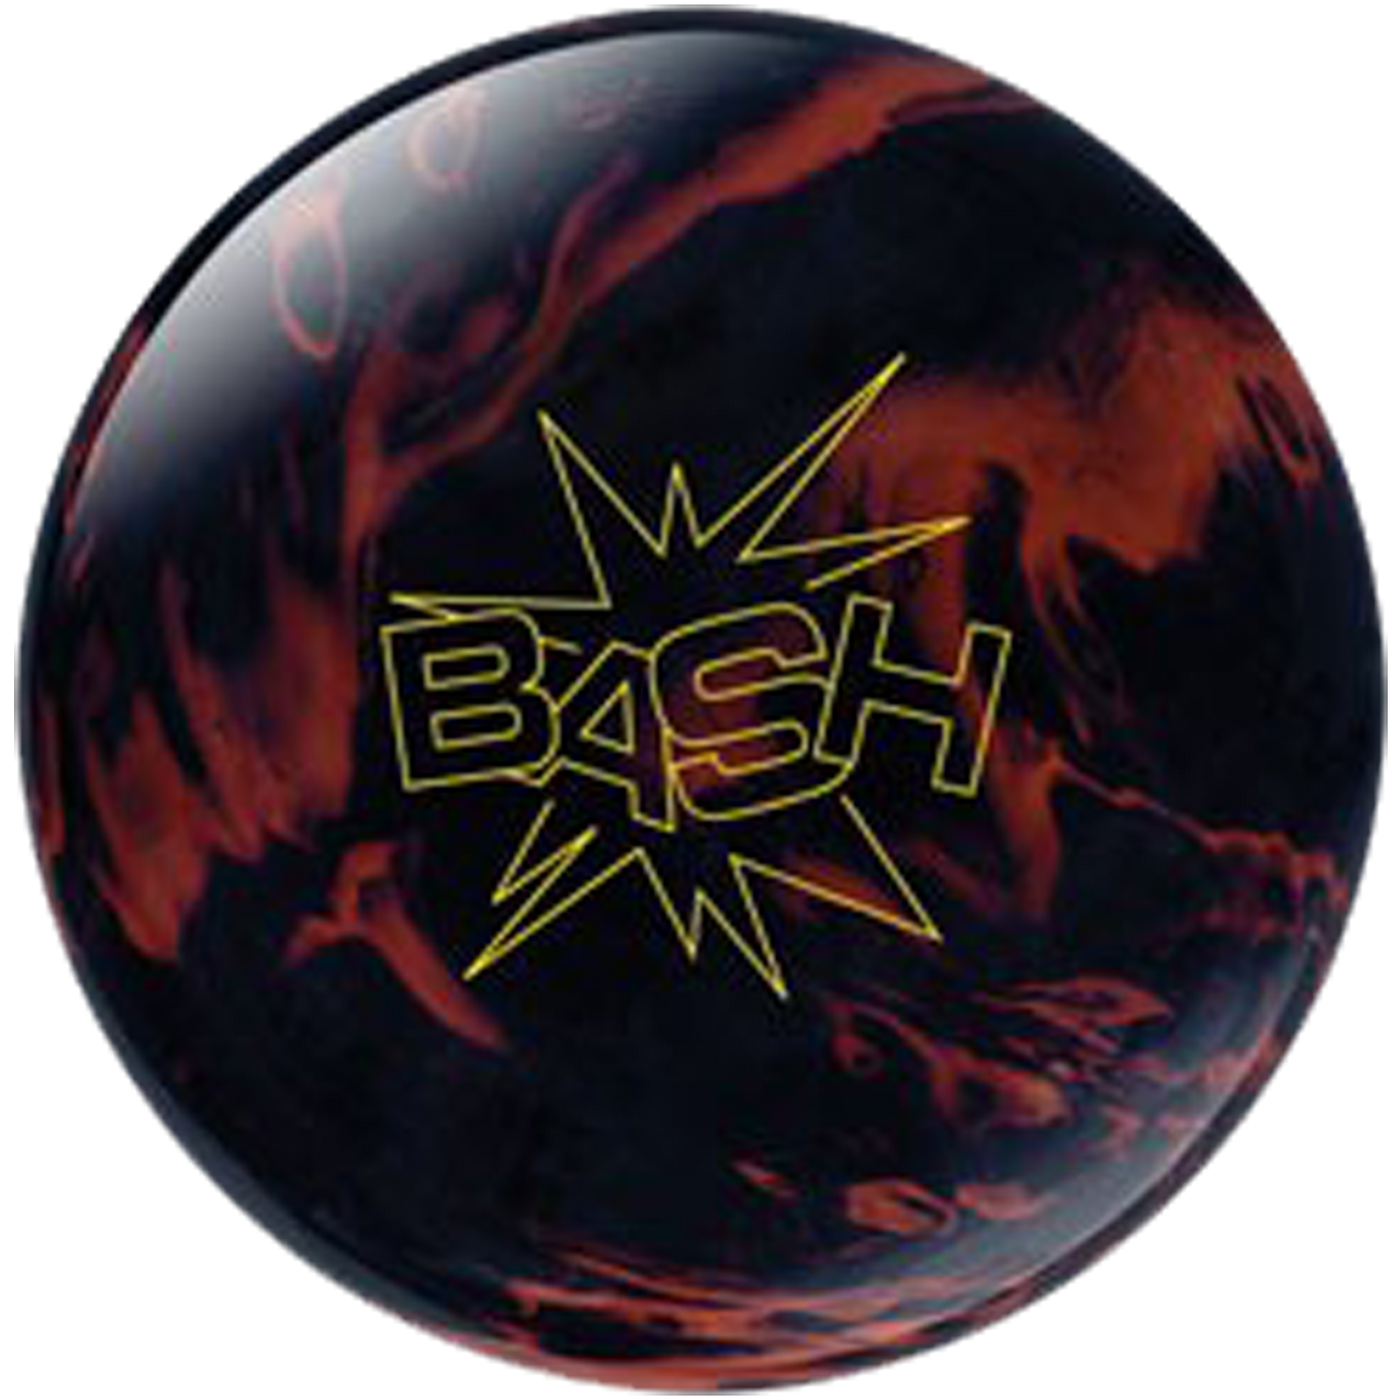 Bash Black/Red Bowling Ball